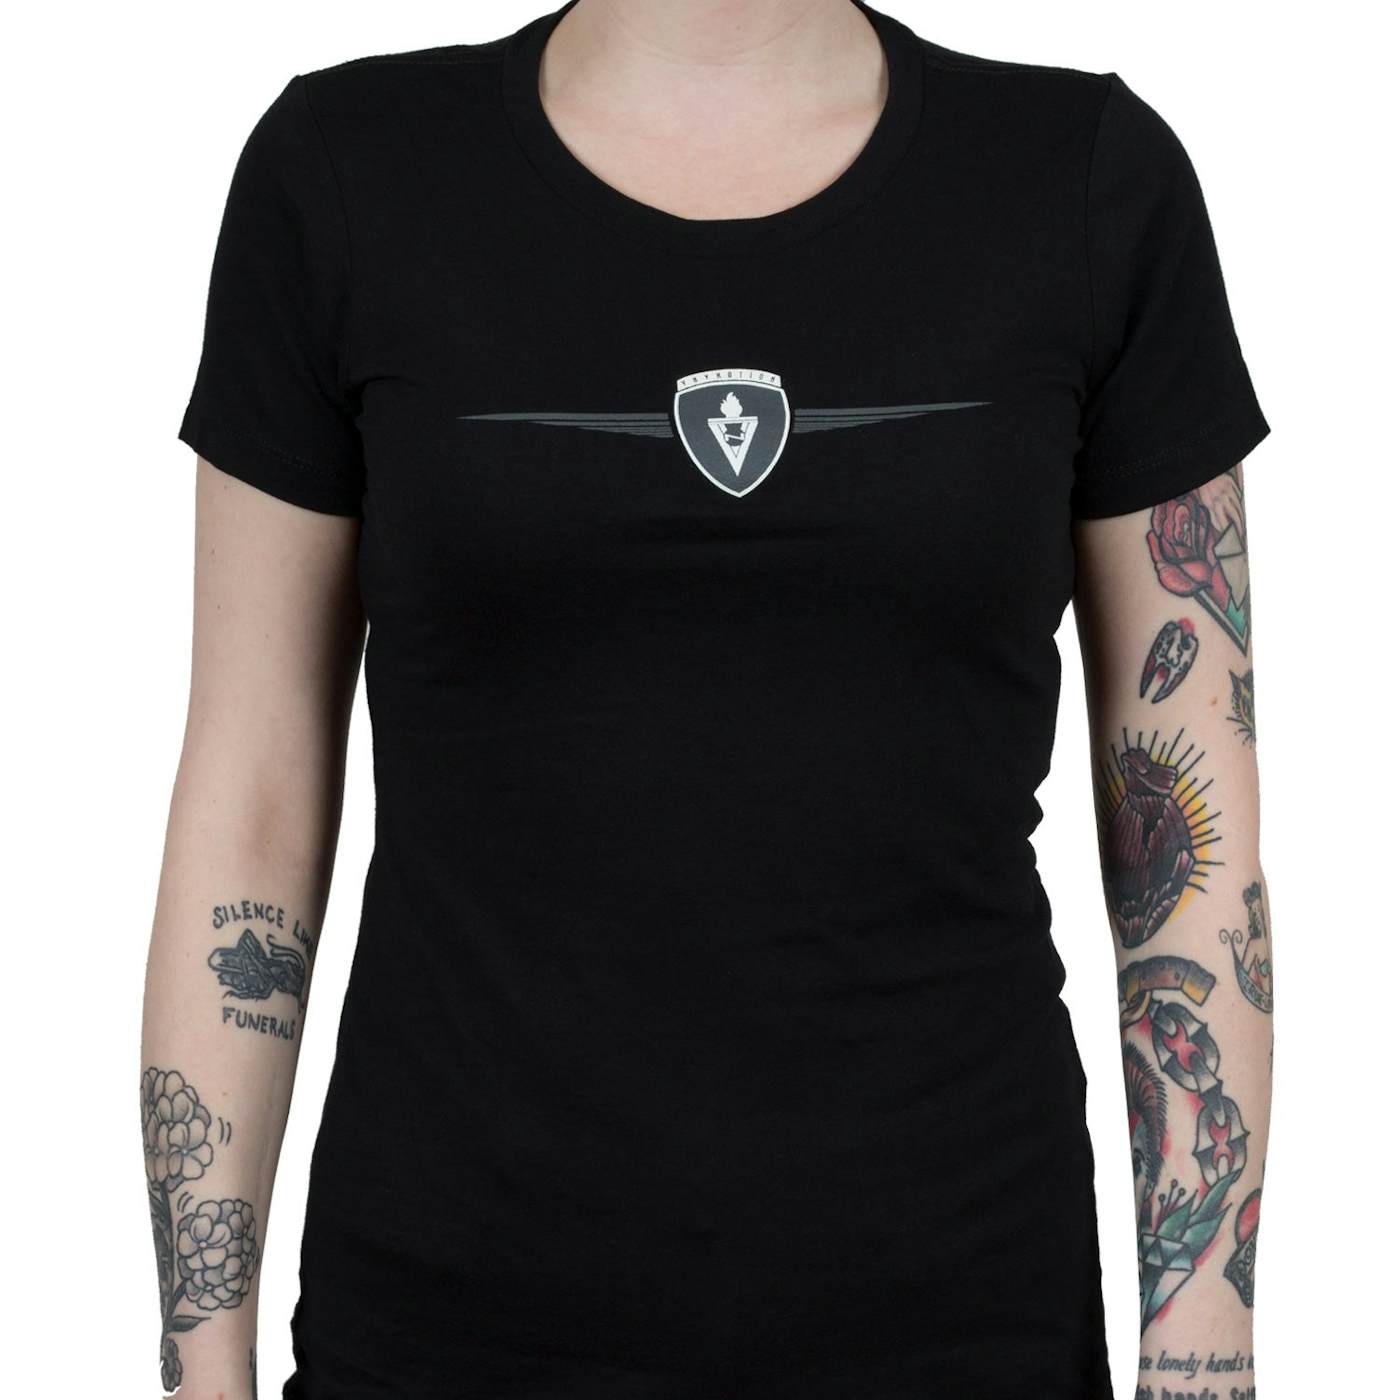 VNV Nation "Compendium" Girls T-shirt